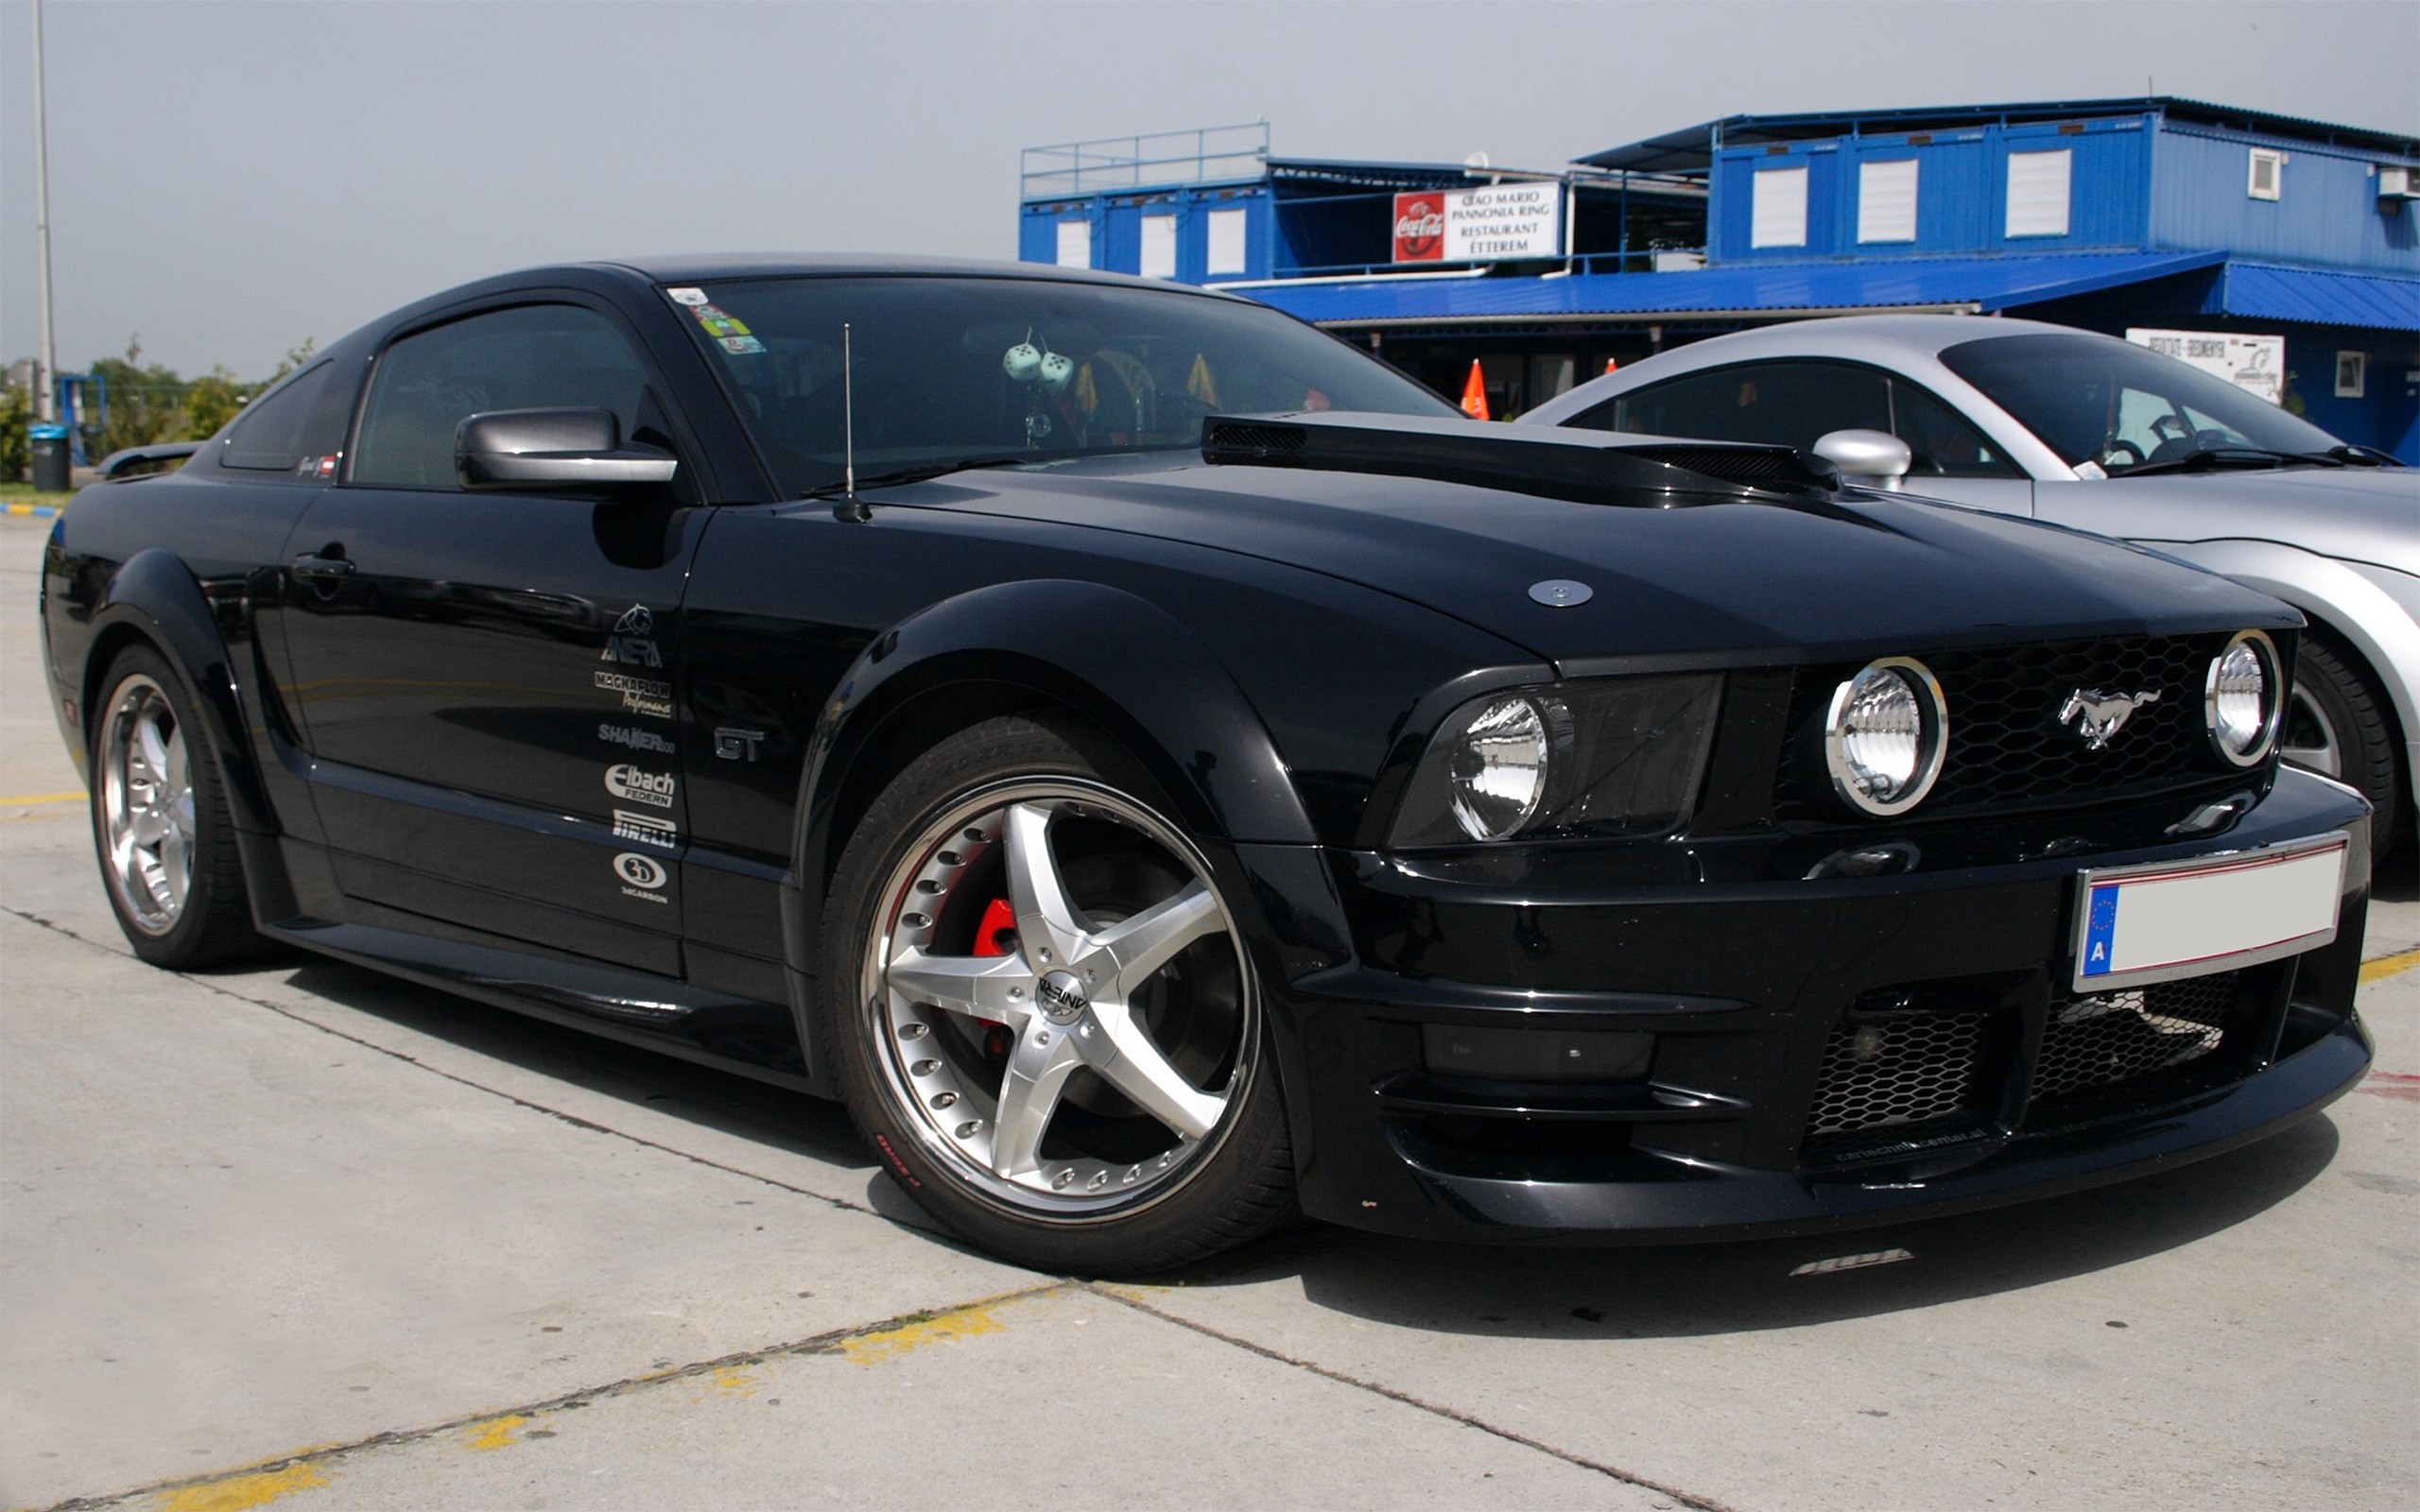 Car Mustang Gt500 Mustang Car Vehicle Black Cars 2560x1600